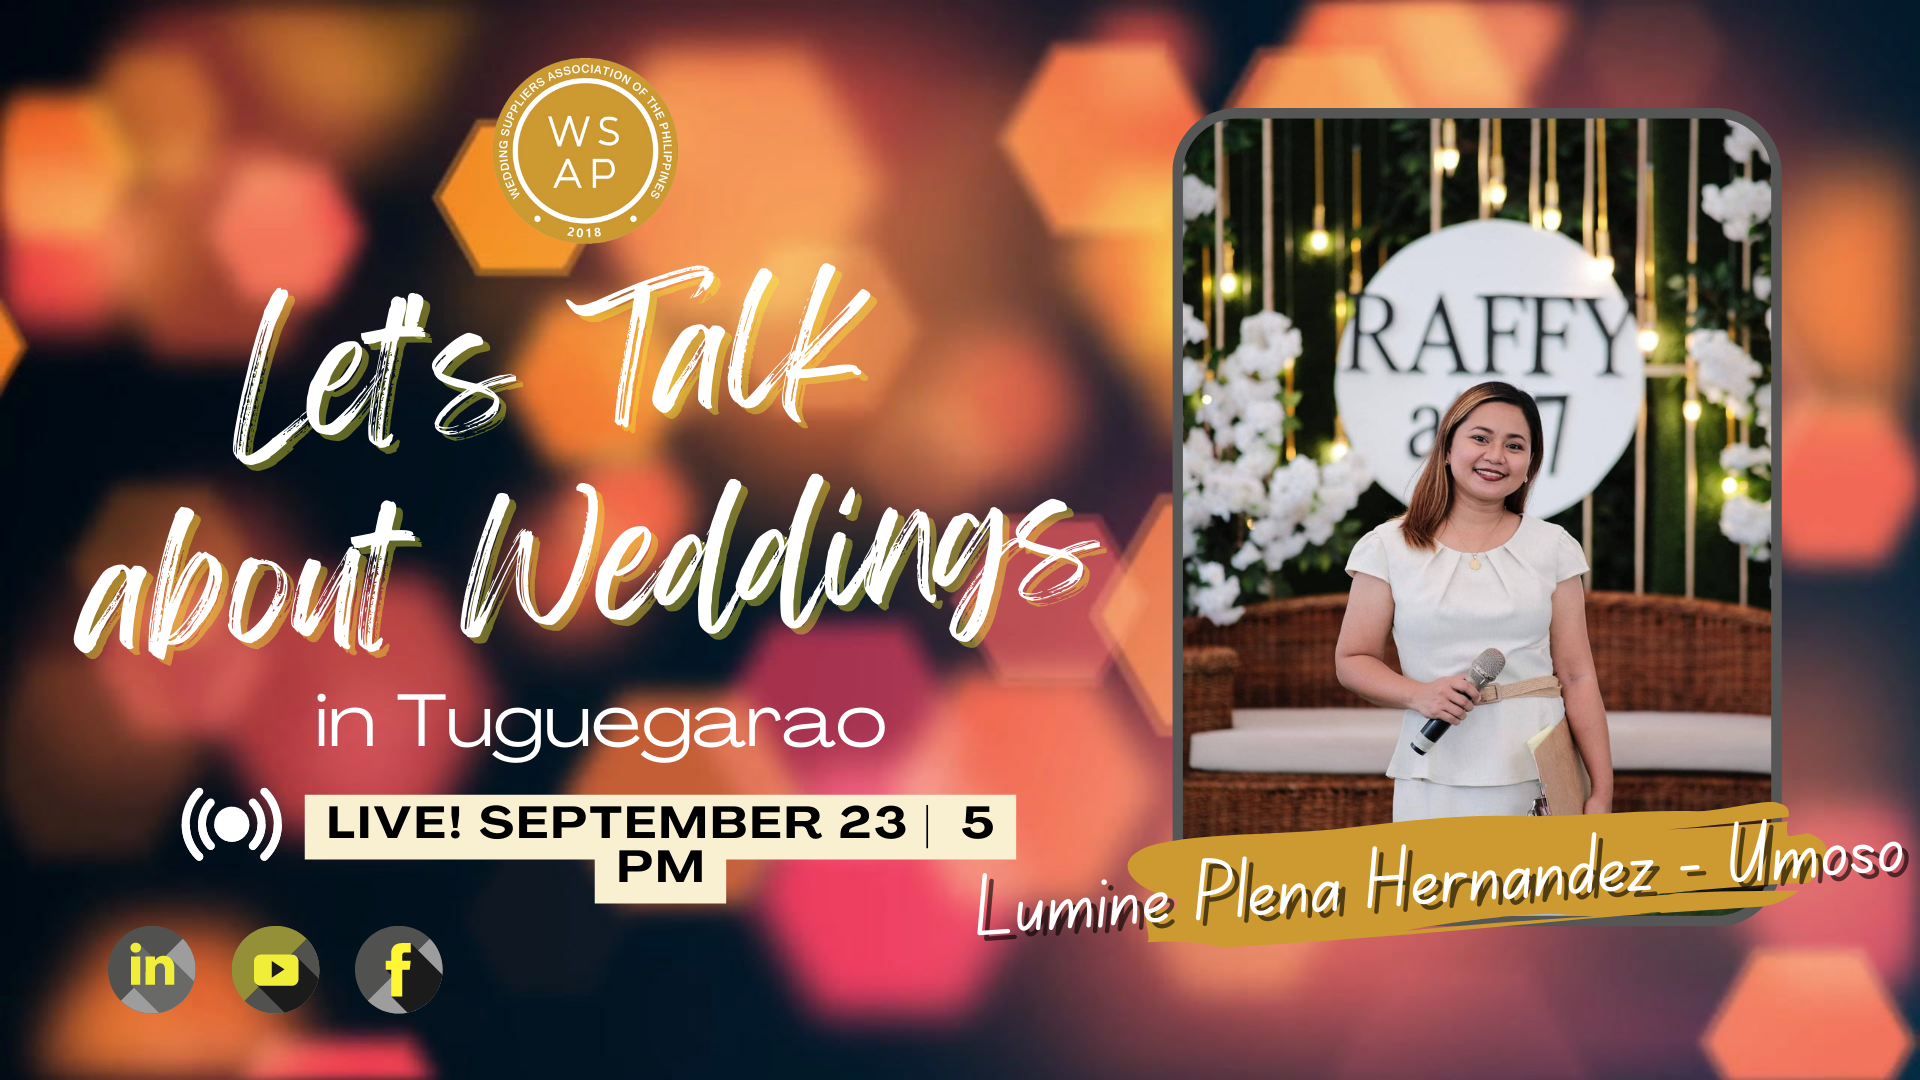 Let's Talk About Weddings in Batangas  with Lumine Plena Hernandez-Umoso